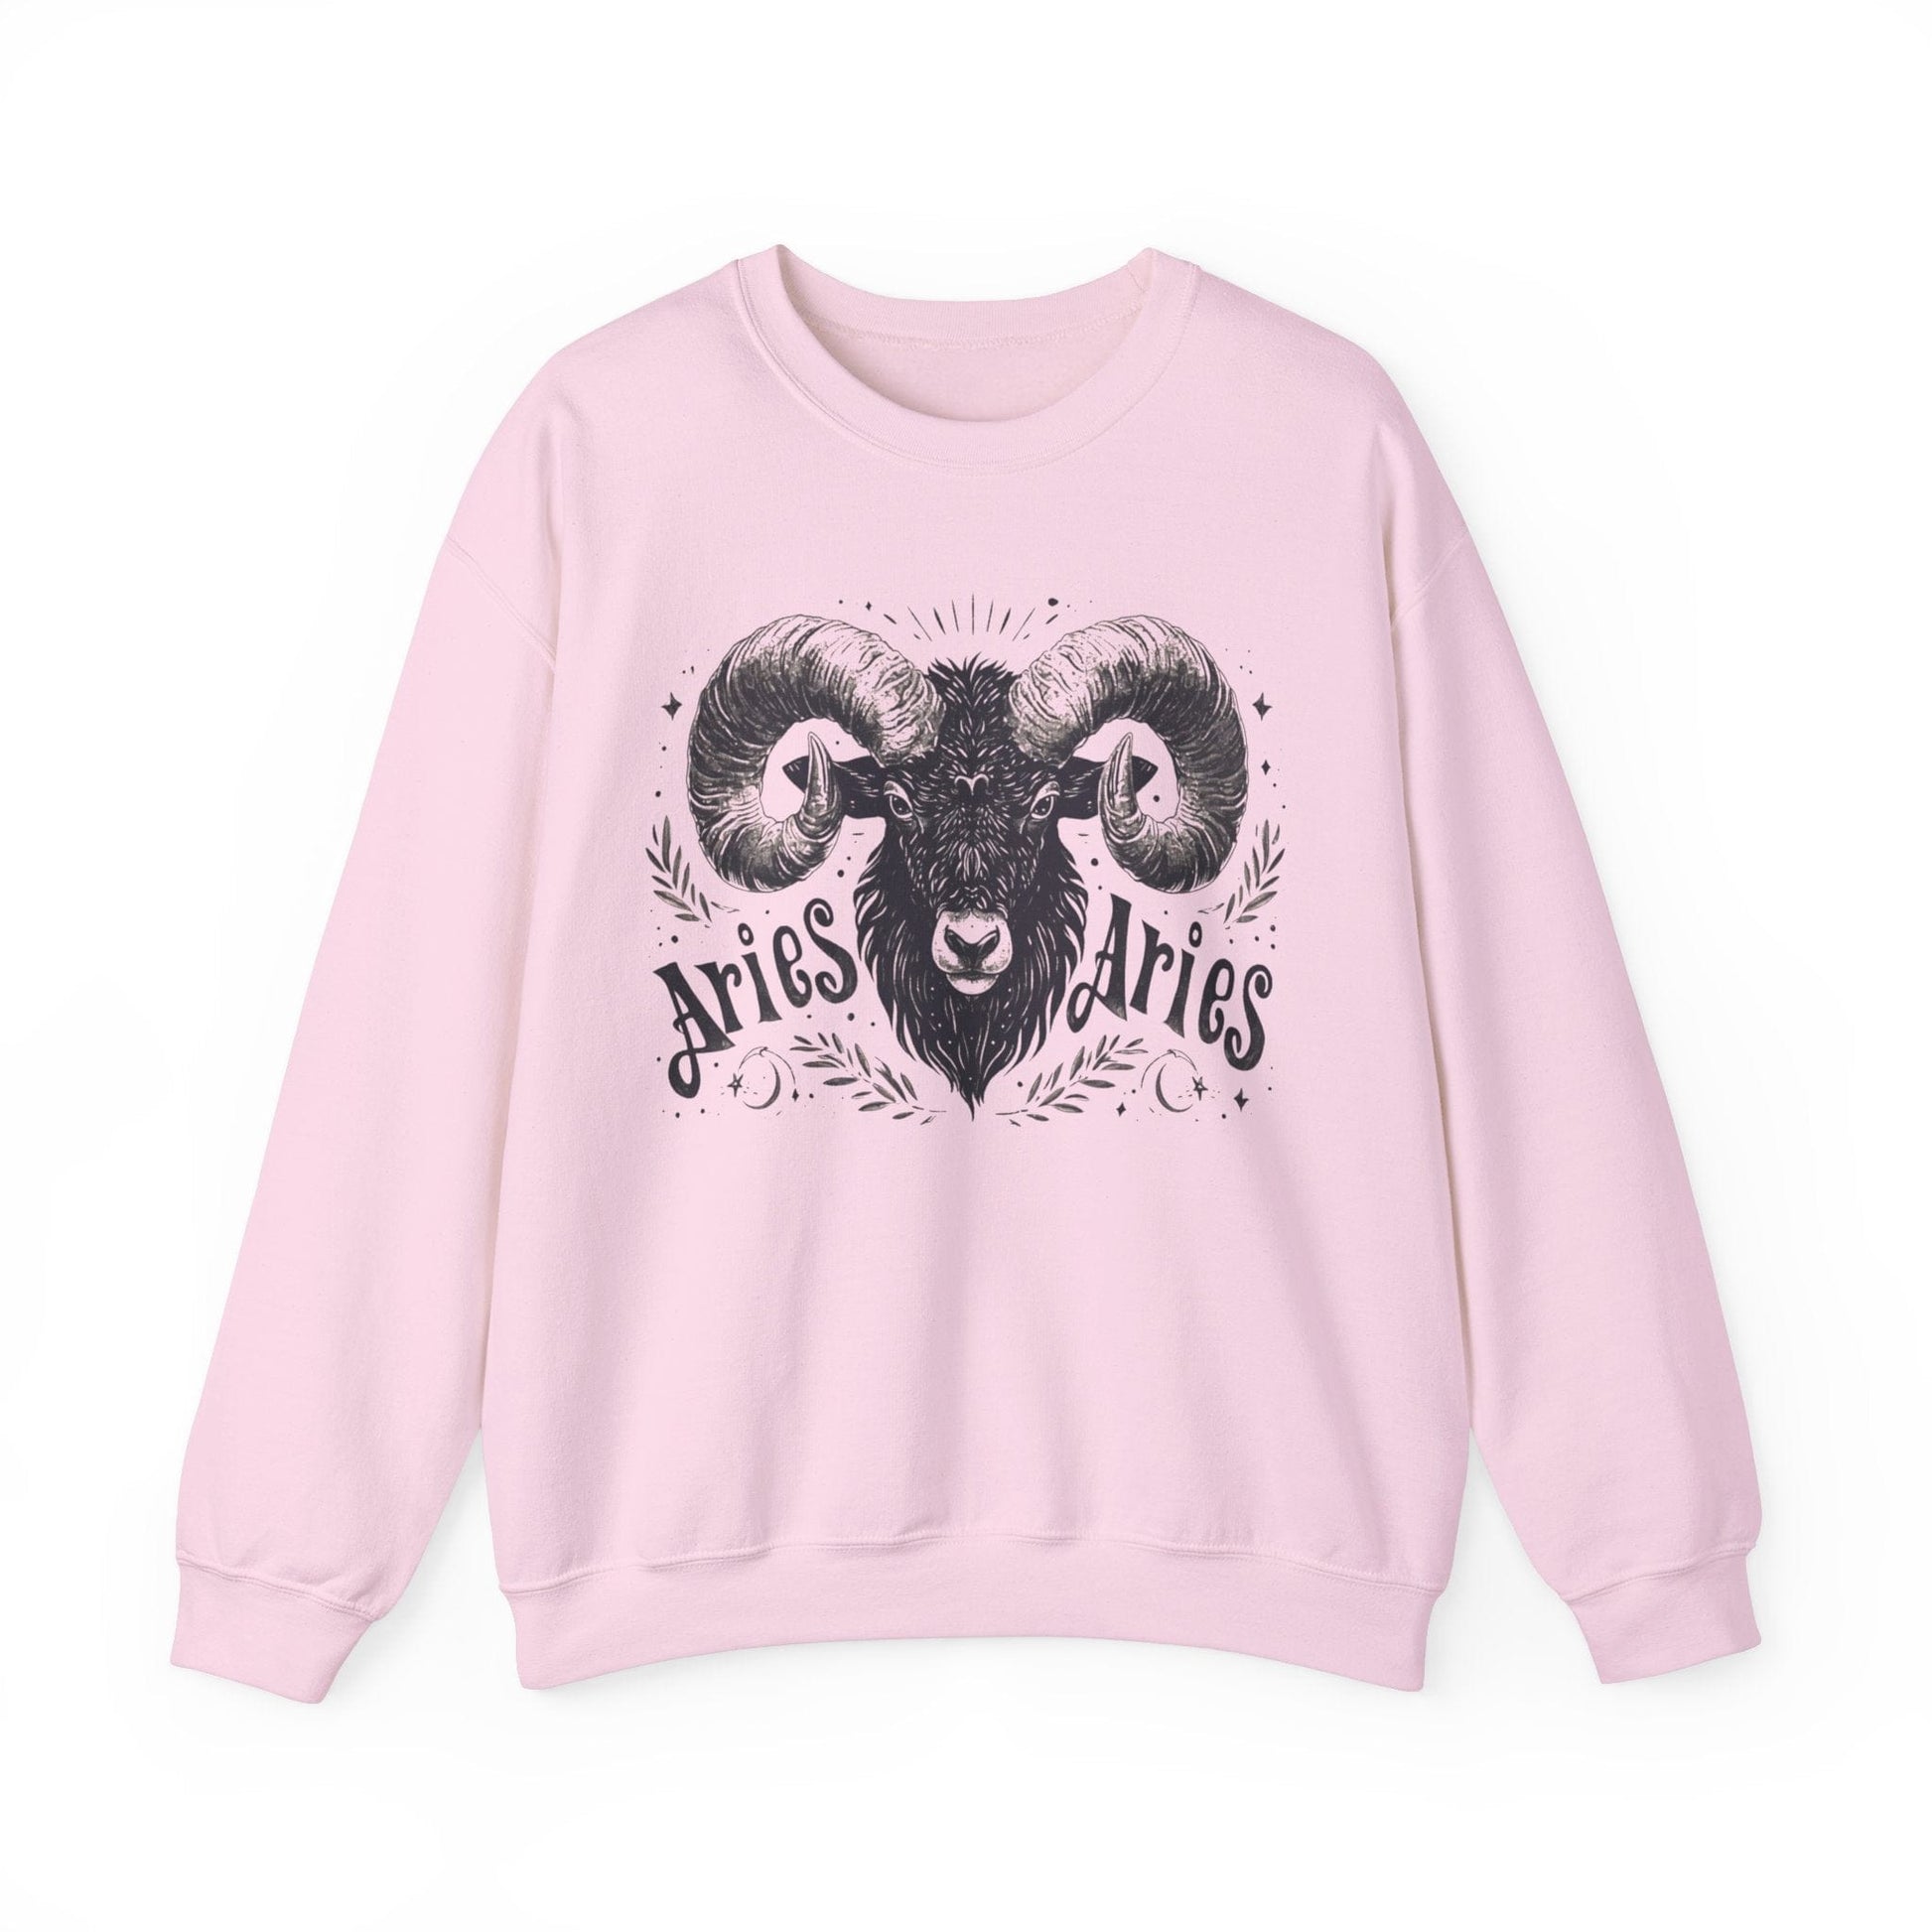 Sweatshirt S / Light Pink Cosmic Ram Aries Soft Sweater: Embrace Your Fire